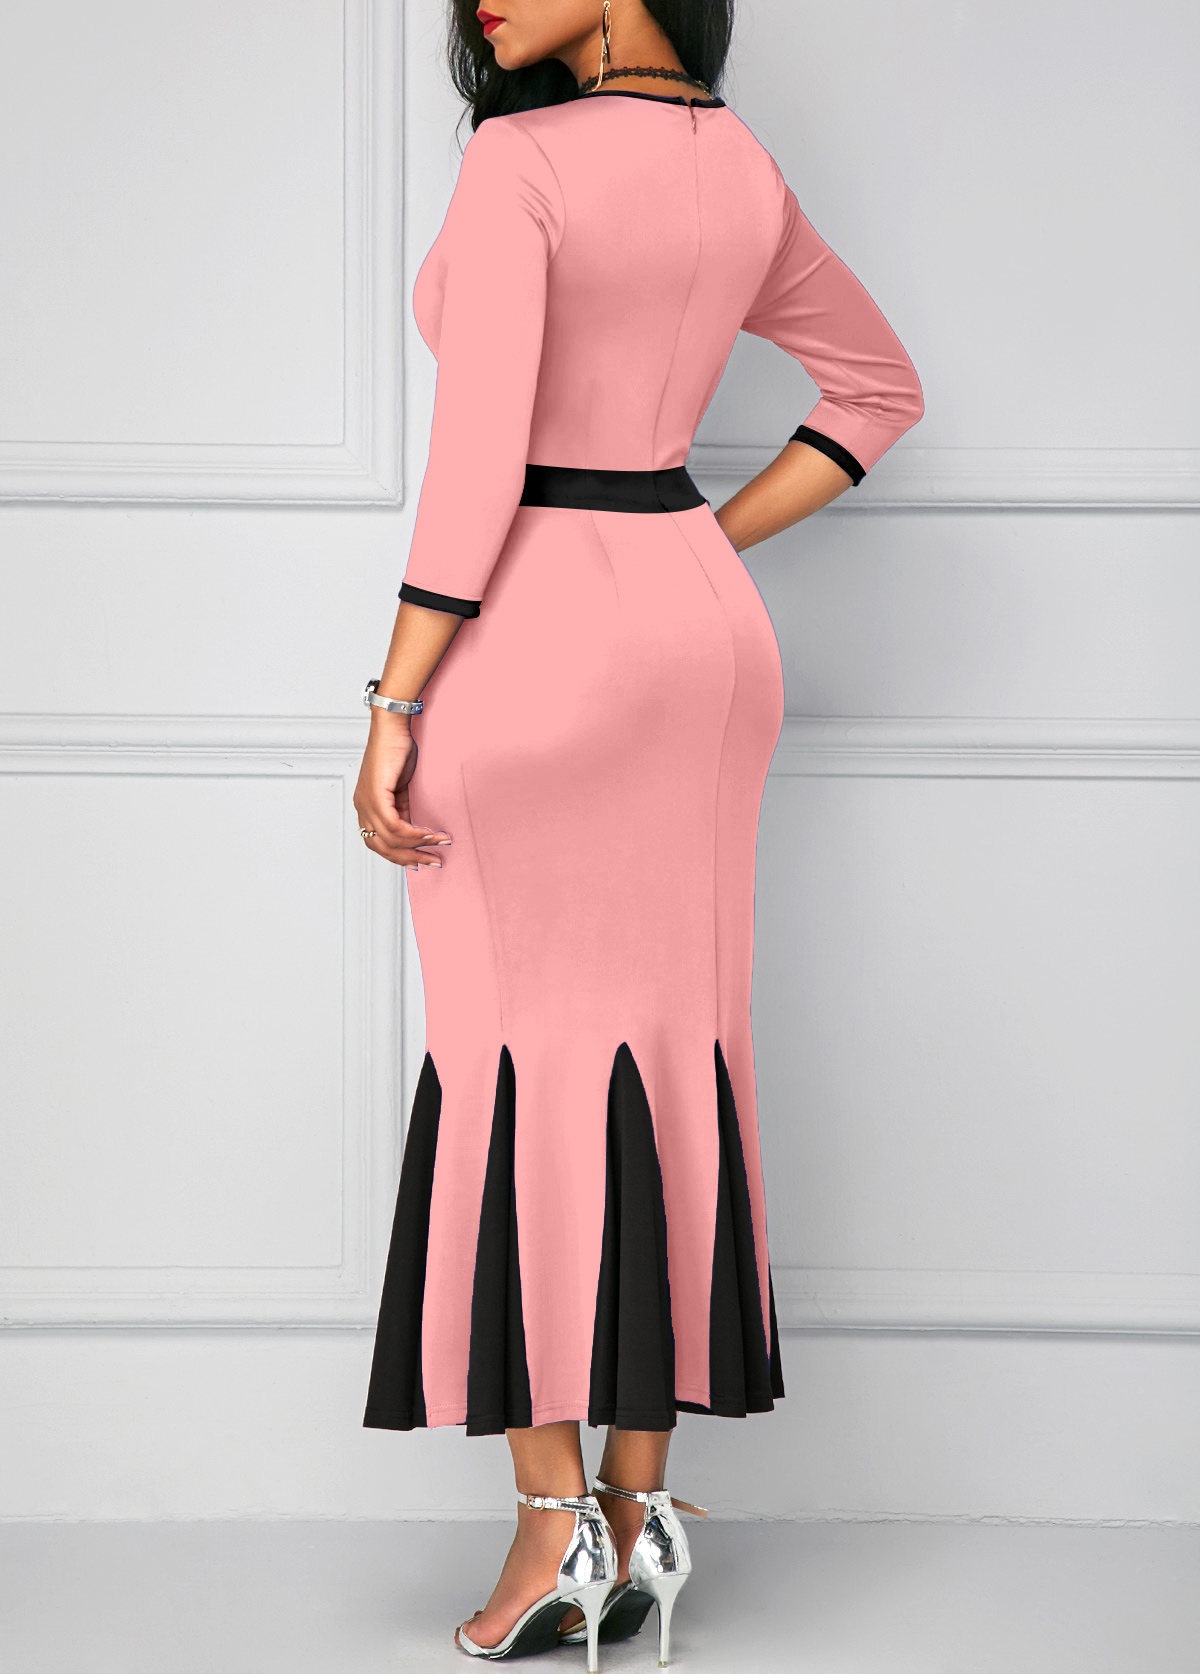 Cut Out Pink Three Quarter Length Sleeve Dress